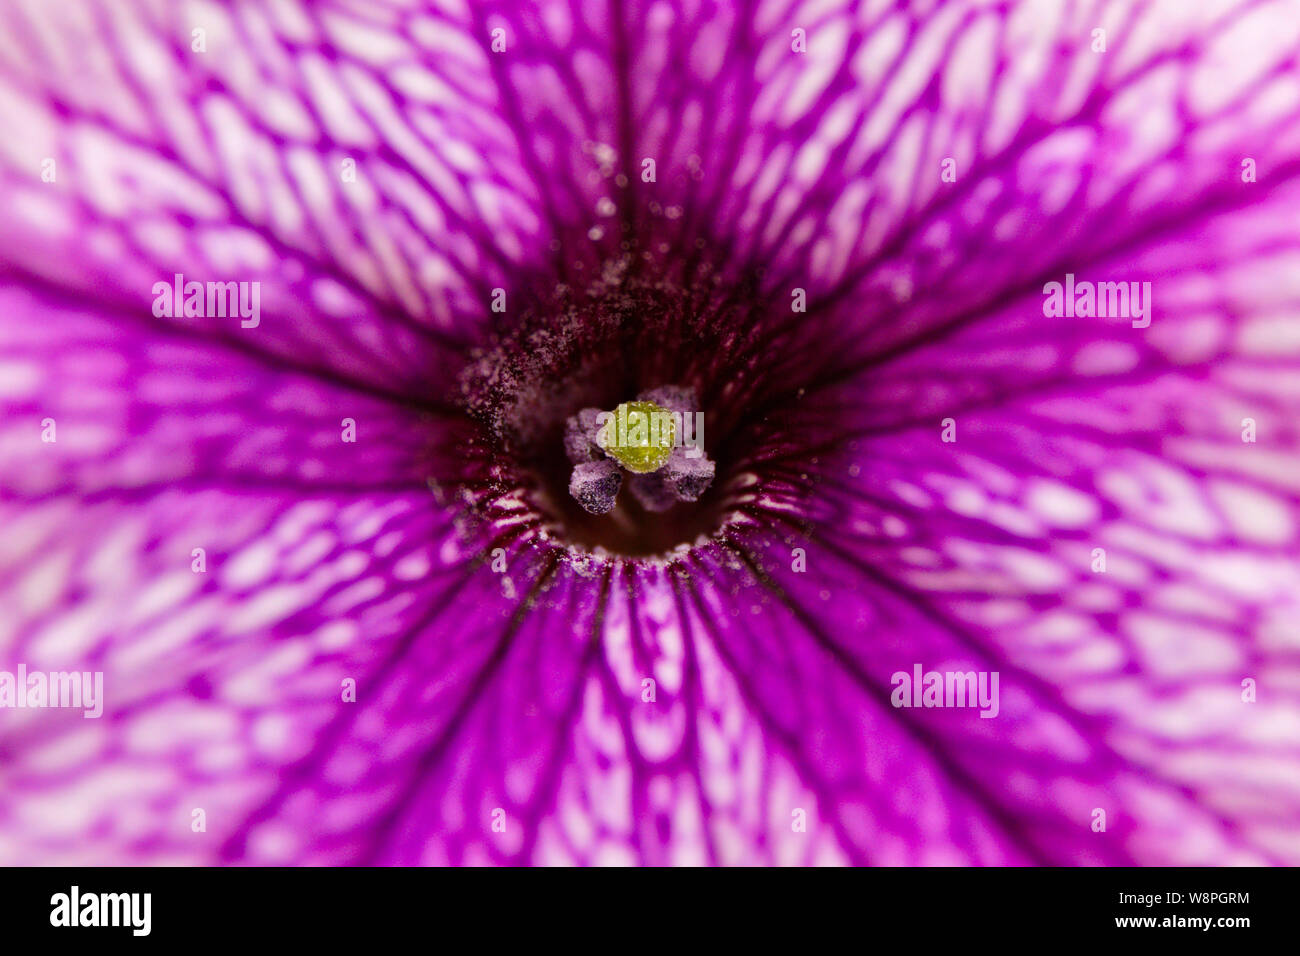 Petunia flower up close Stock Photo